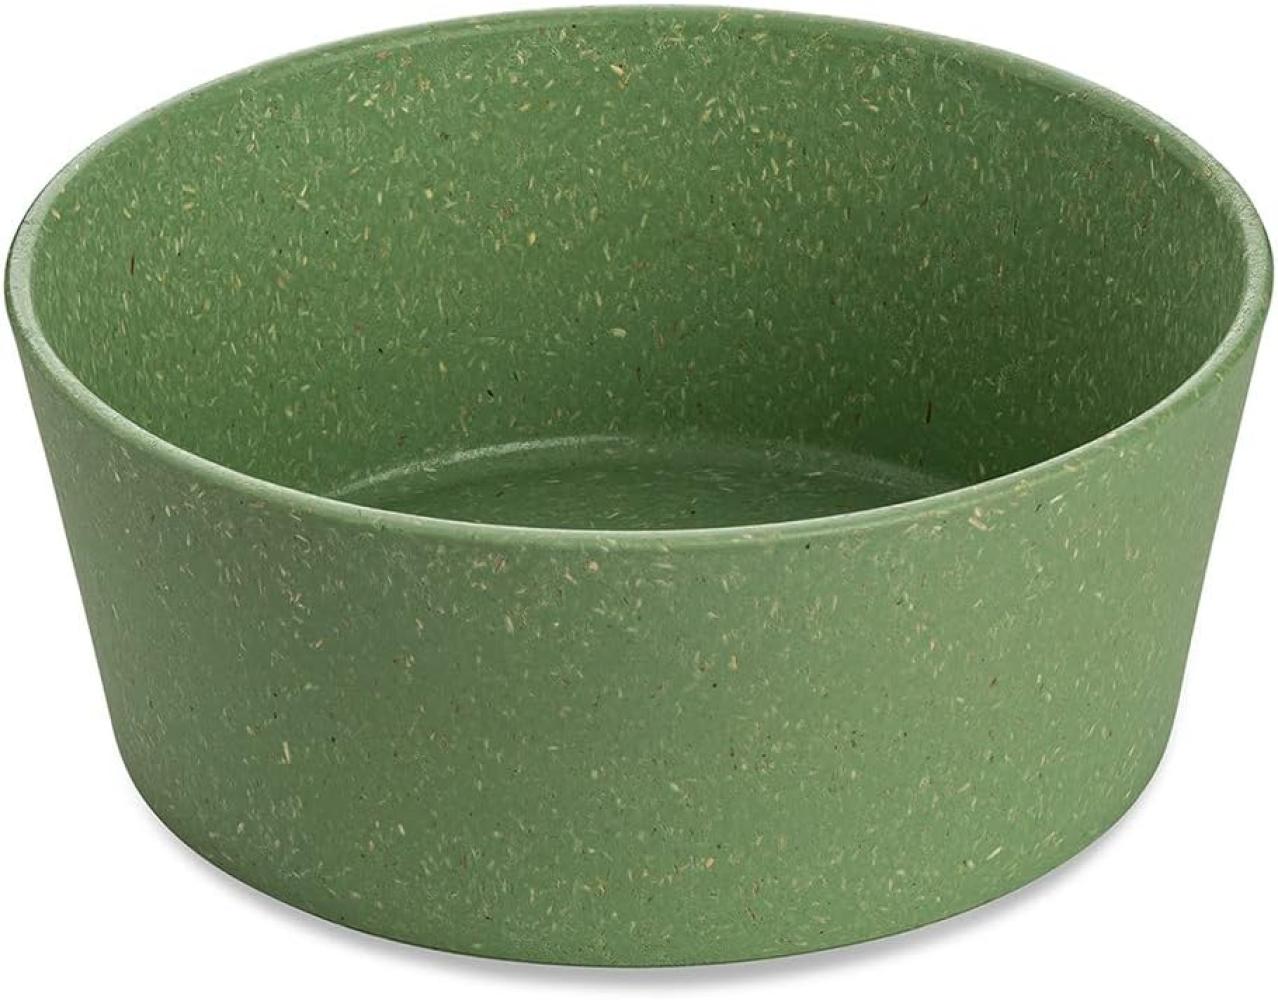 Koziol Schalen 2er-Set Connect Bowl, Schüsseln, Kunststoff-Holz-Mix, Nature Leaf Green, 400 ml, 7102703 Bild 1